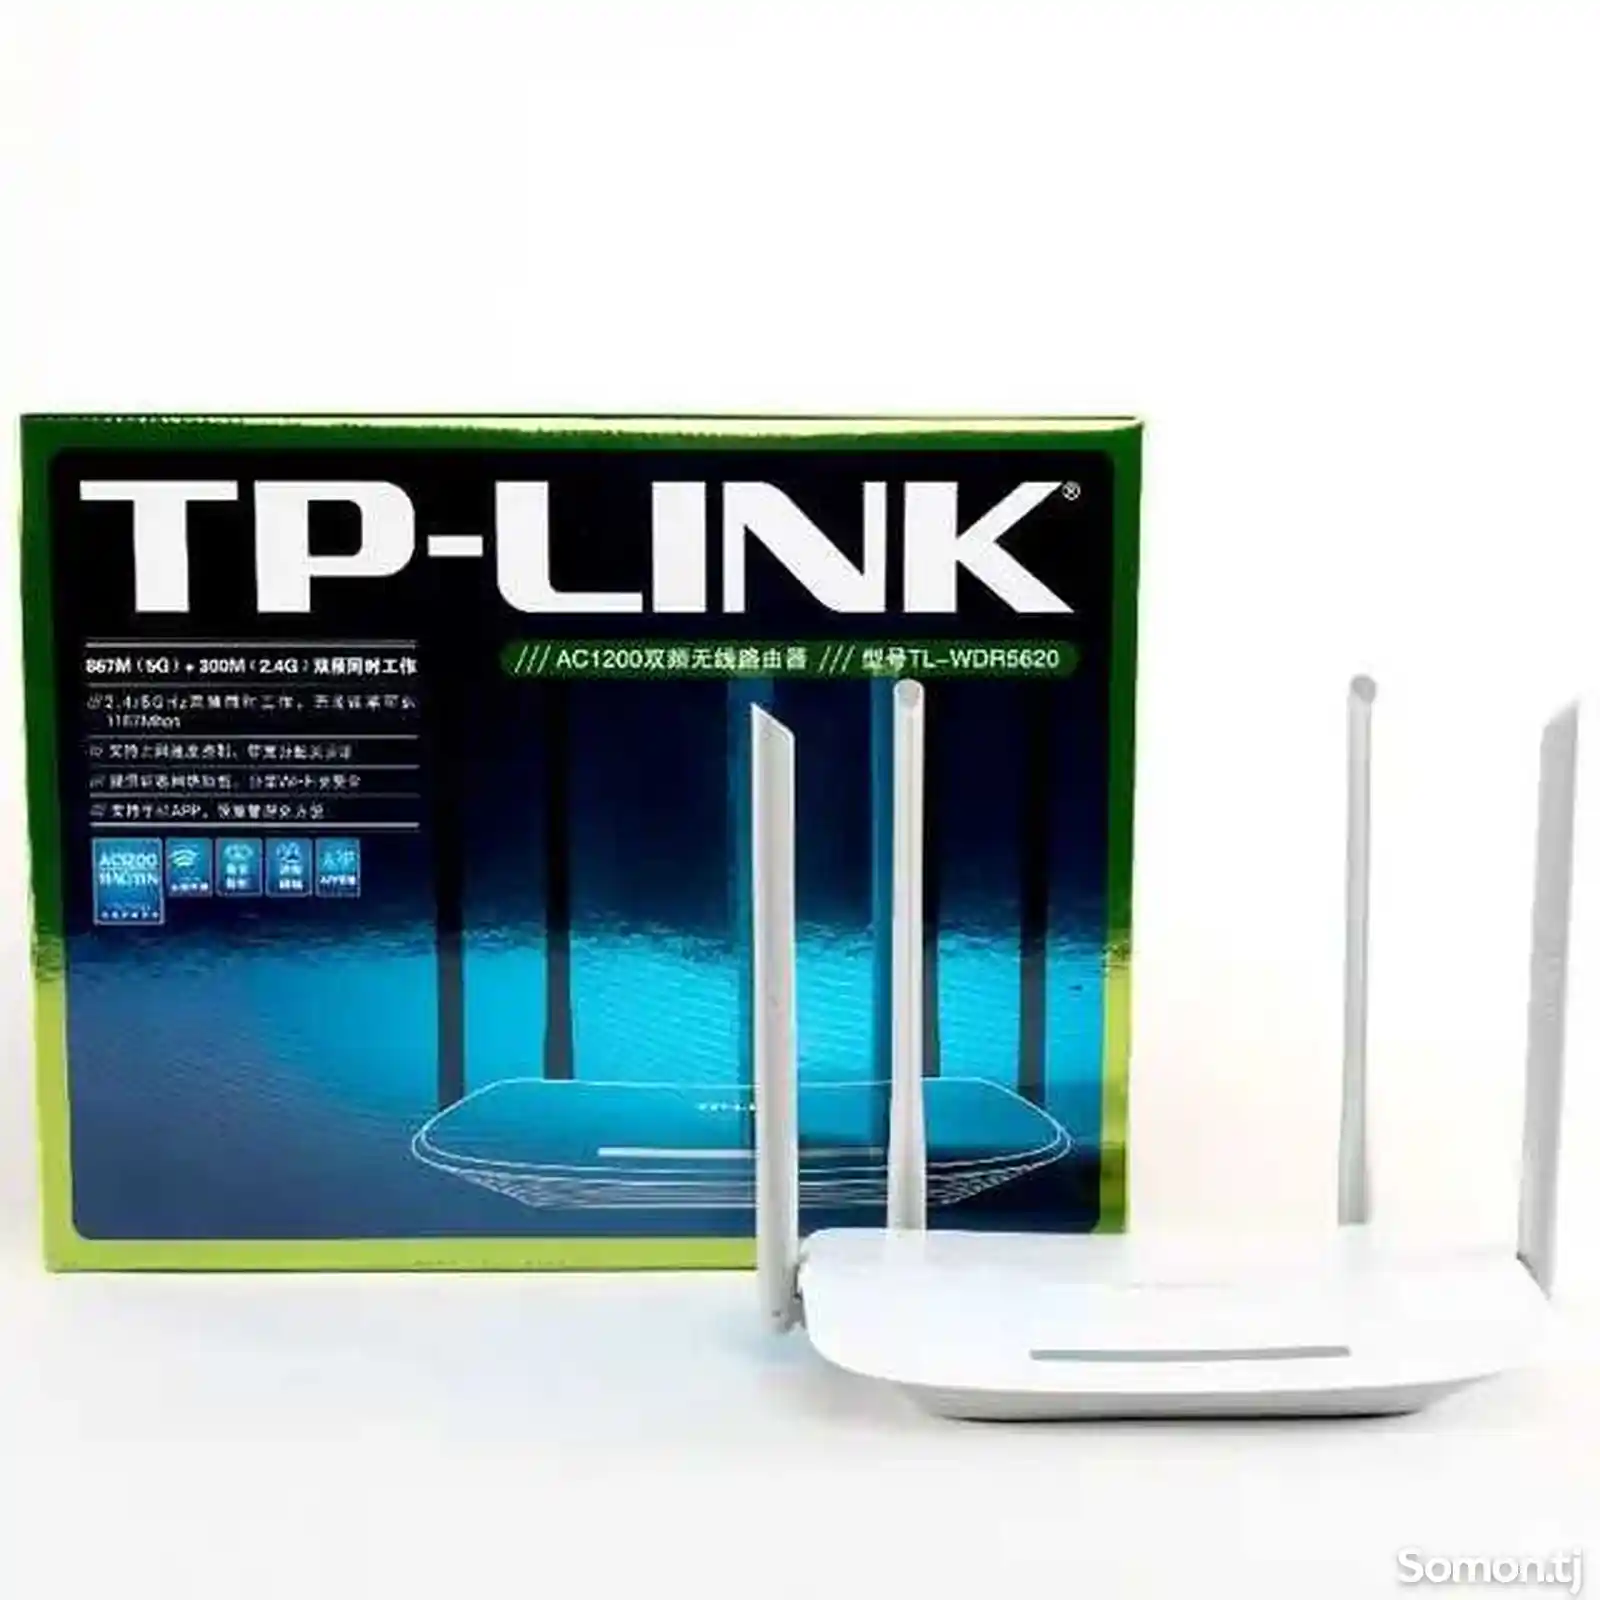 Роутер TP-Link TL-WDR5620-2